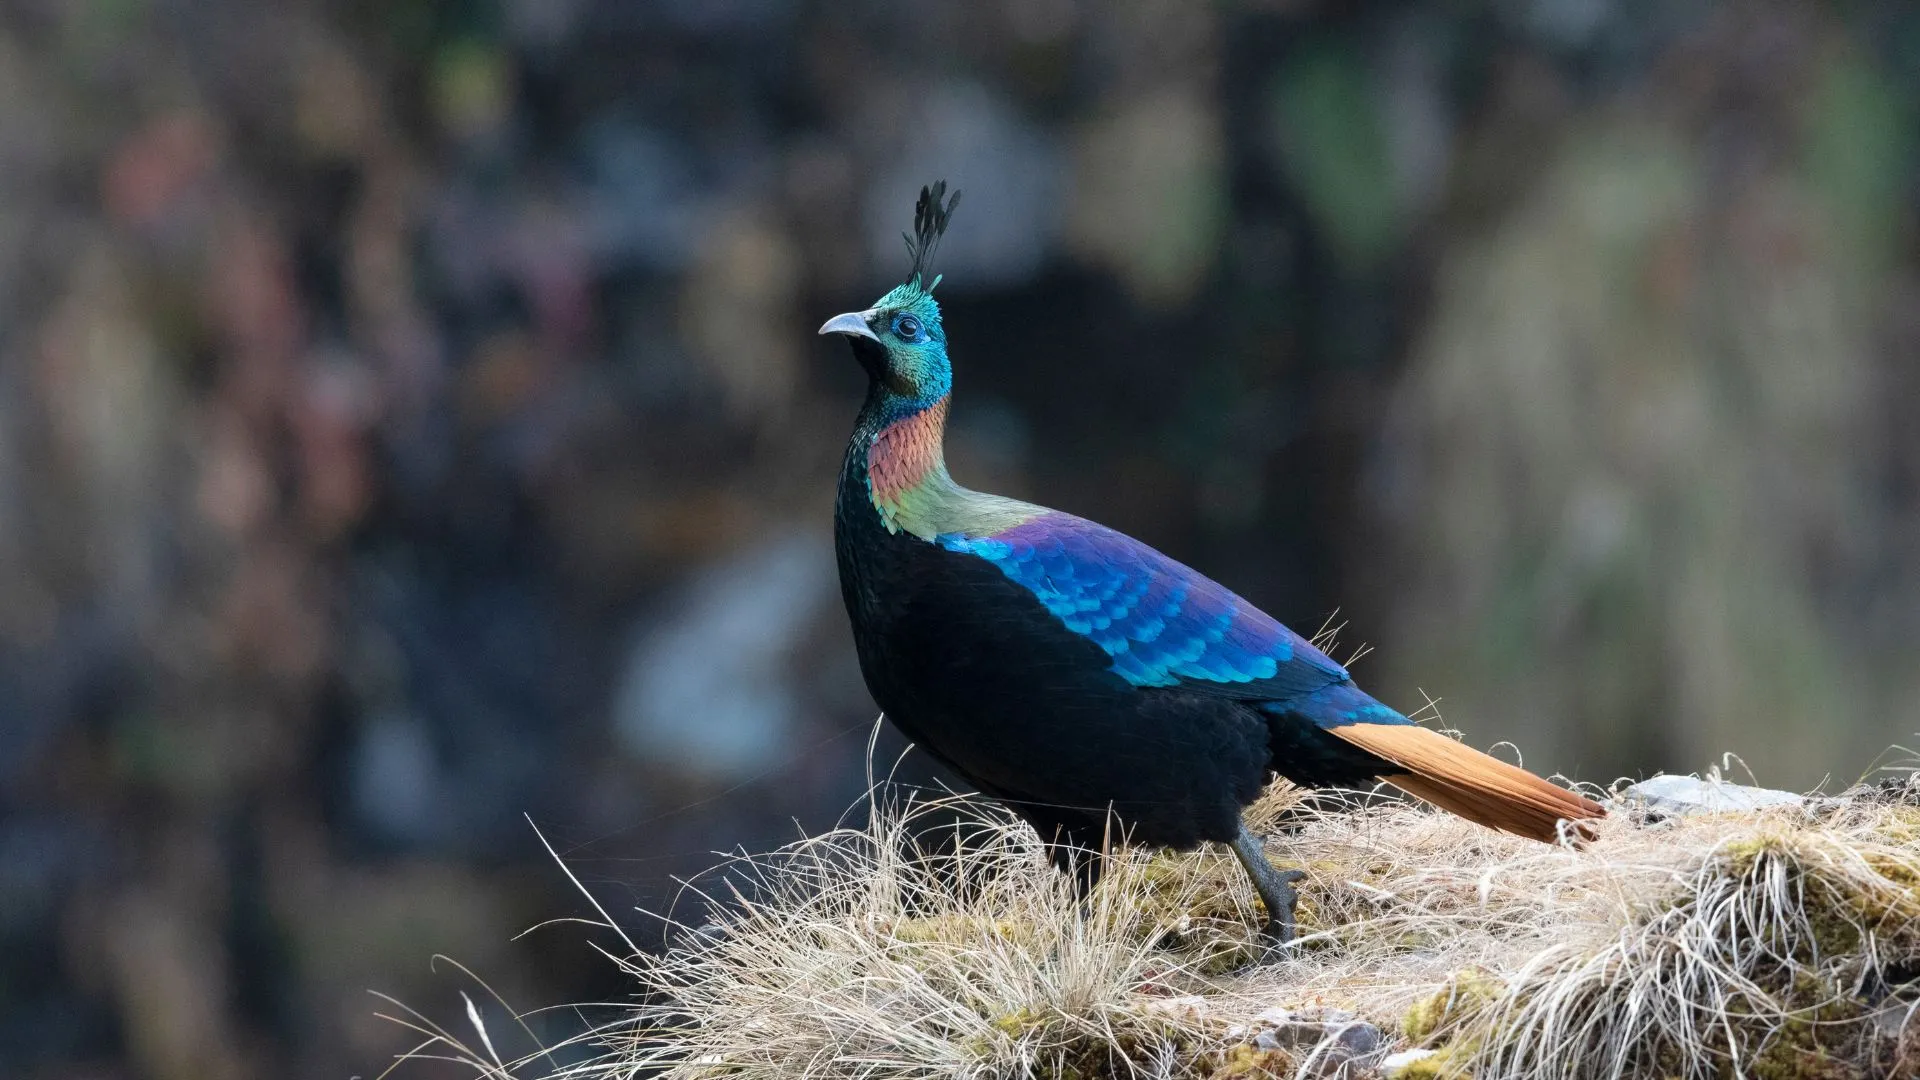 Mangalavanam Bird Sanctuary